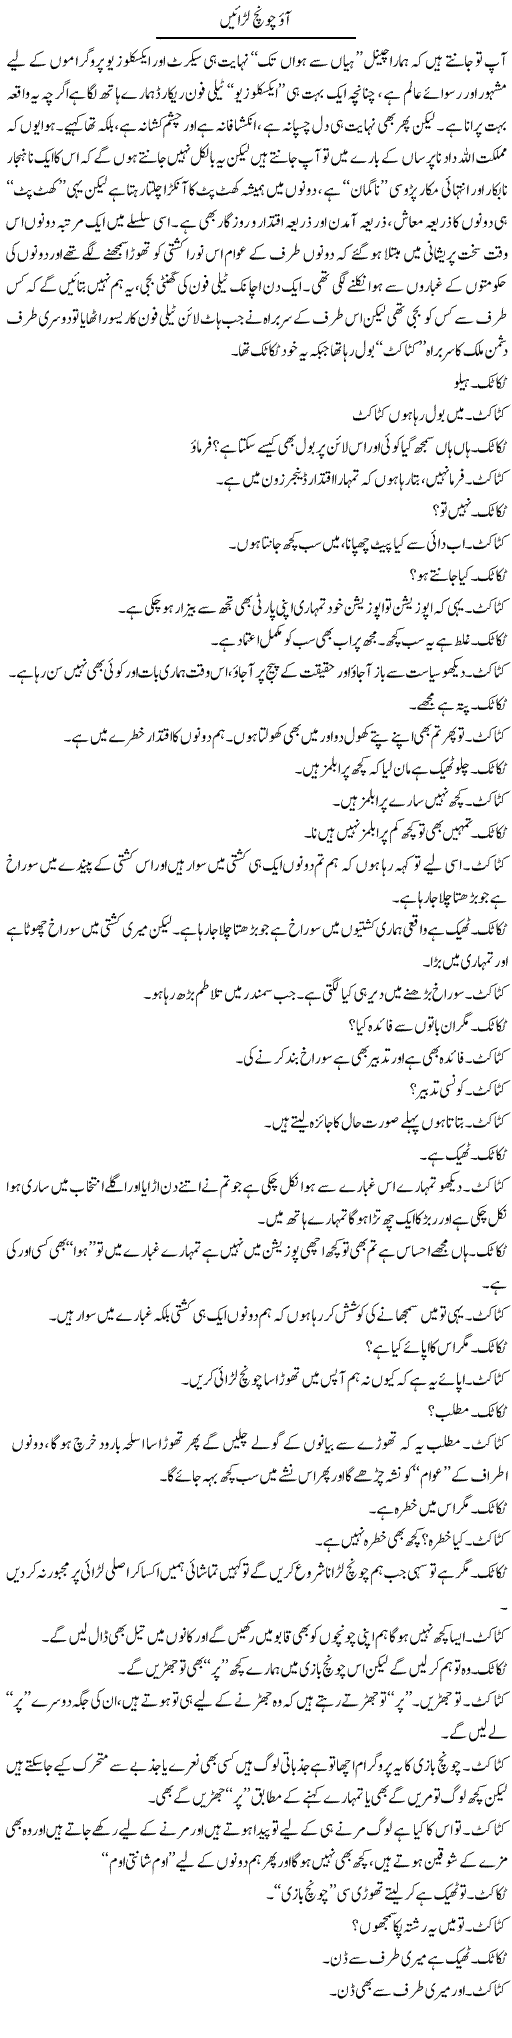 Aao Choonch Larrain | Saad Ullah Jan Barq | Daily Urdu Columns